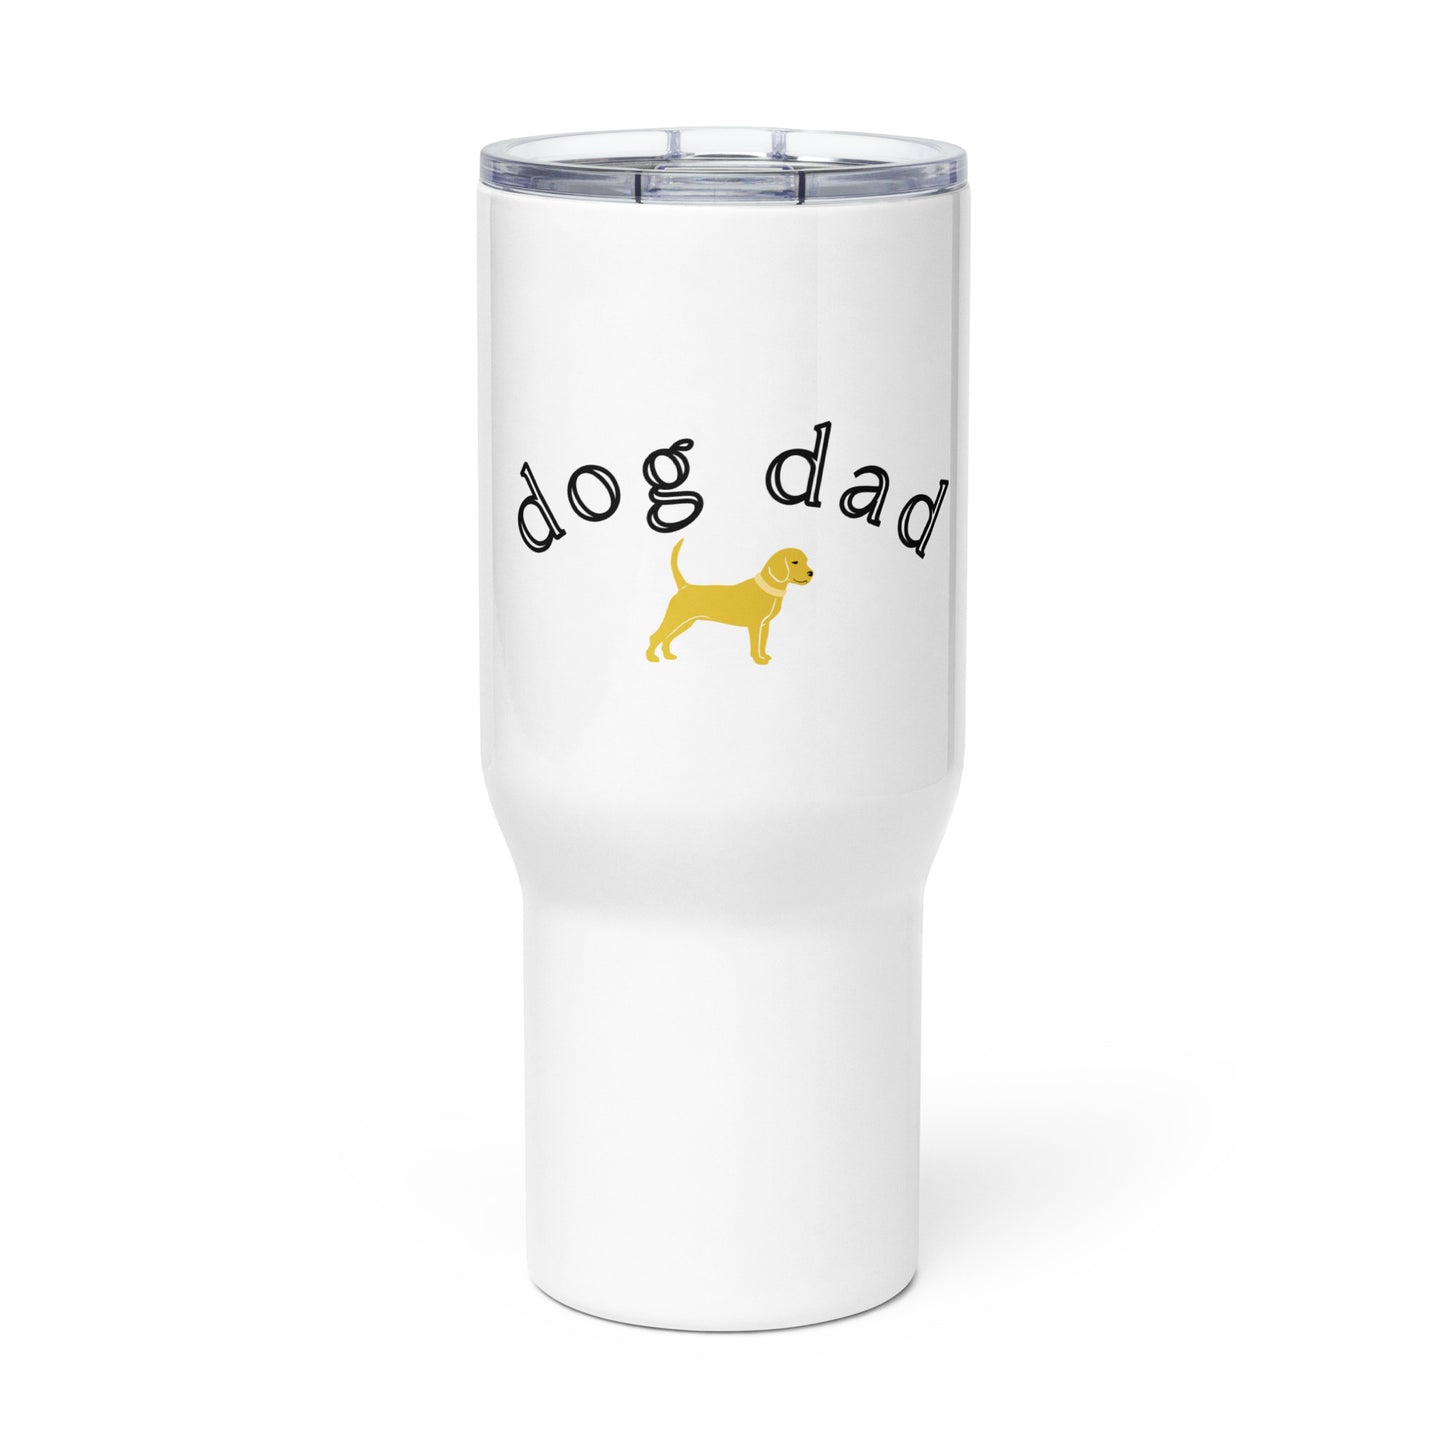 Dog Dad Travel mug with a handle